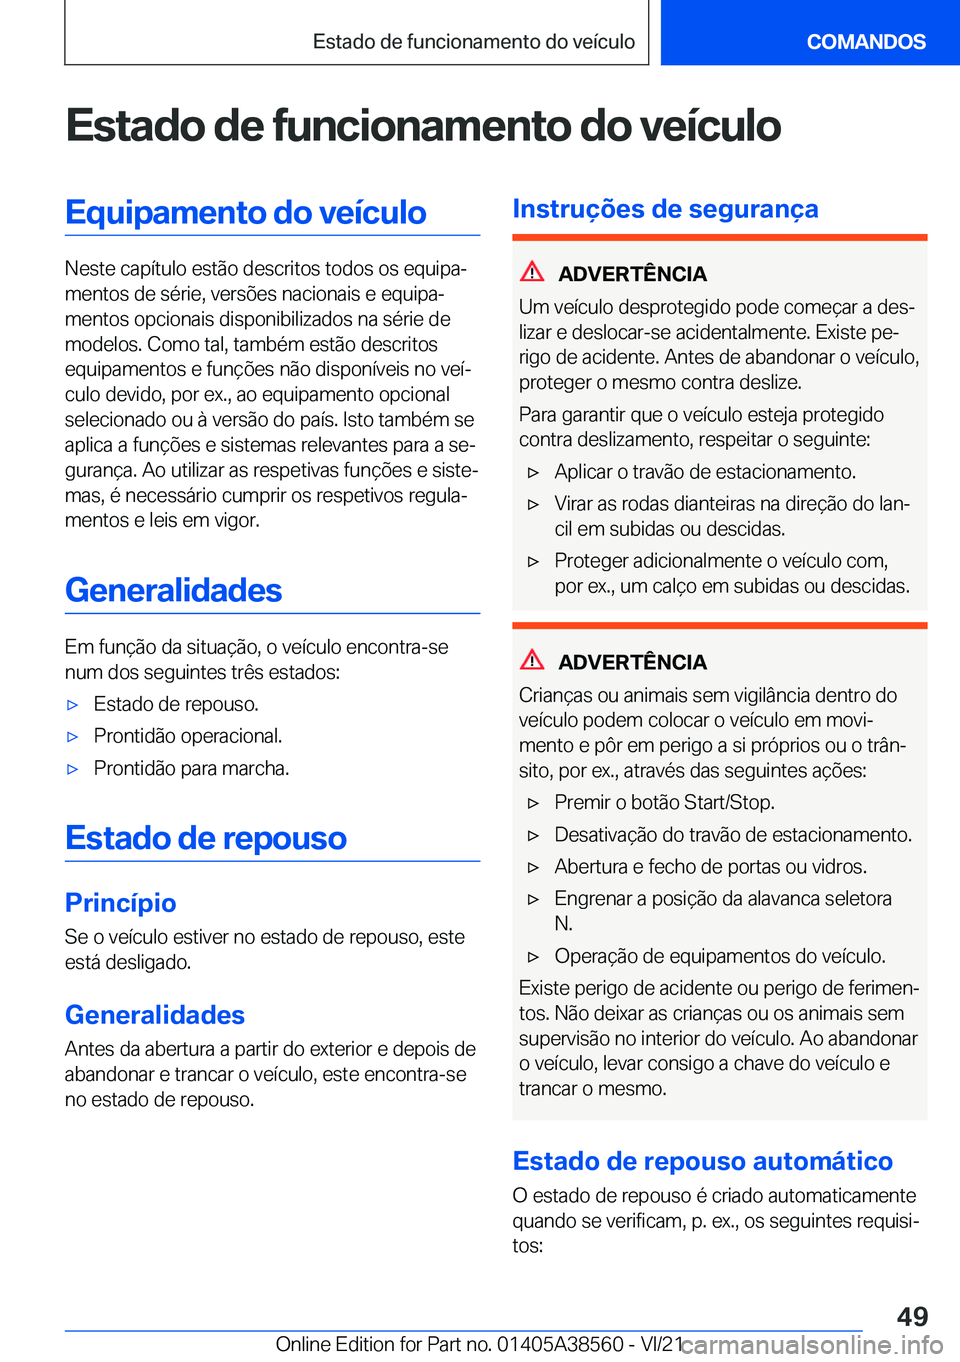 BMW X6 2022  Manual do condutor (in Portuguese) �E�s�t�a�d�o��d�e��f�u�n�c�i�o�n�a�m�e�n�t�o��d�o��v�e�